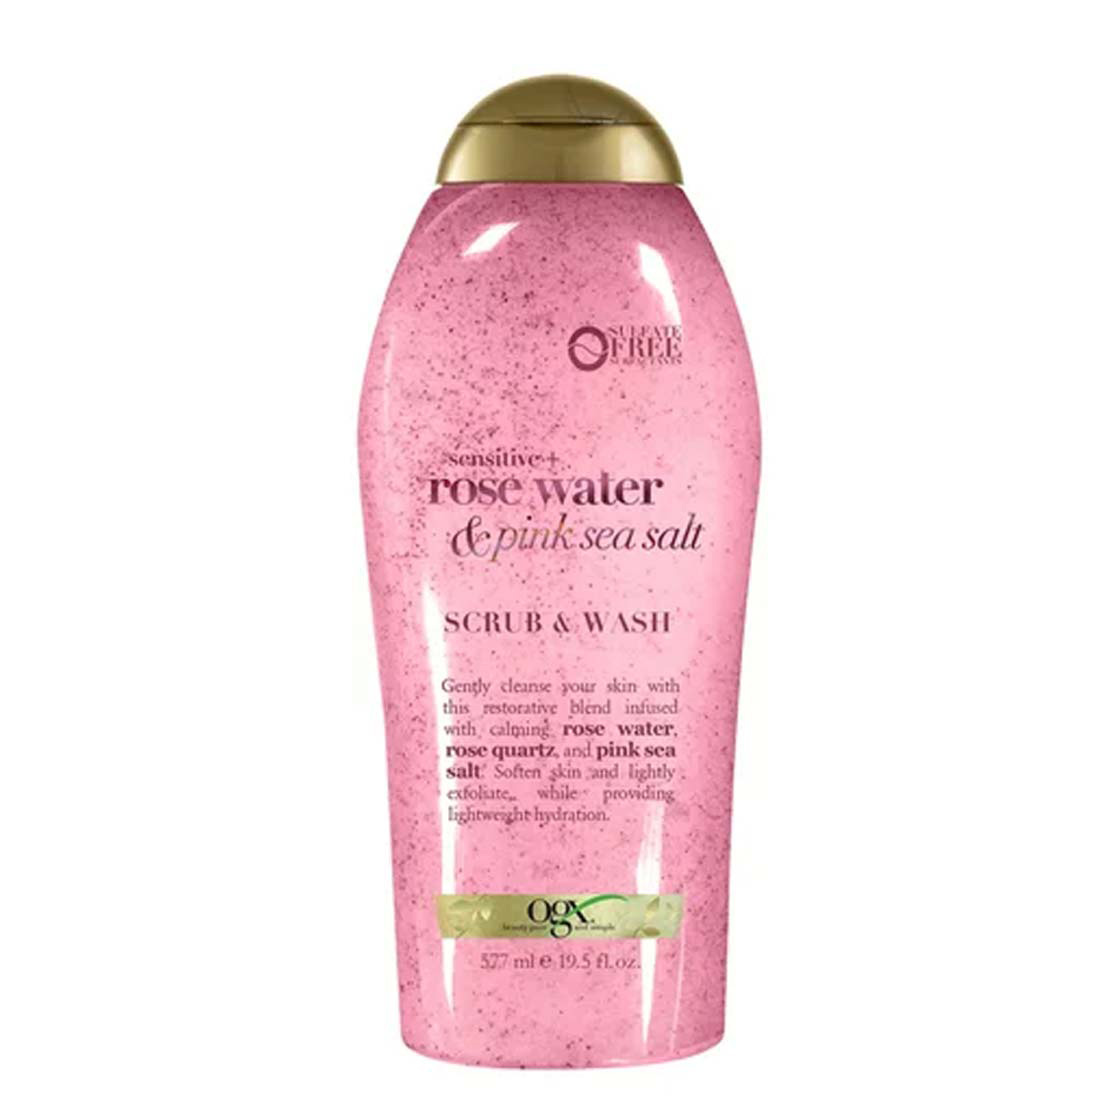 pink bottle of OGX Sensitive + Pink Sea Salt & Rosewater Sulfate-Free Soothing Body Scrub with Healing Rose Quartz